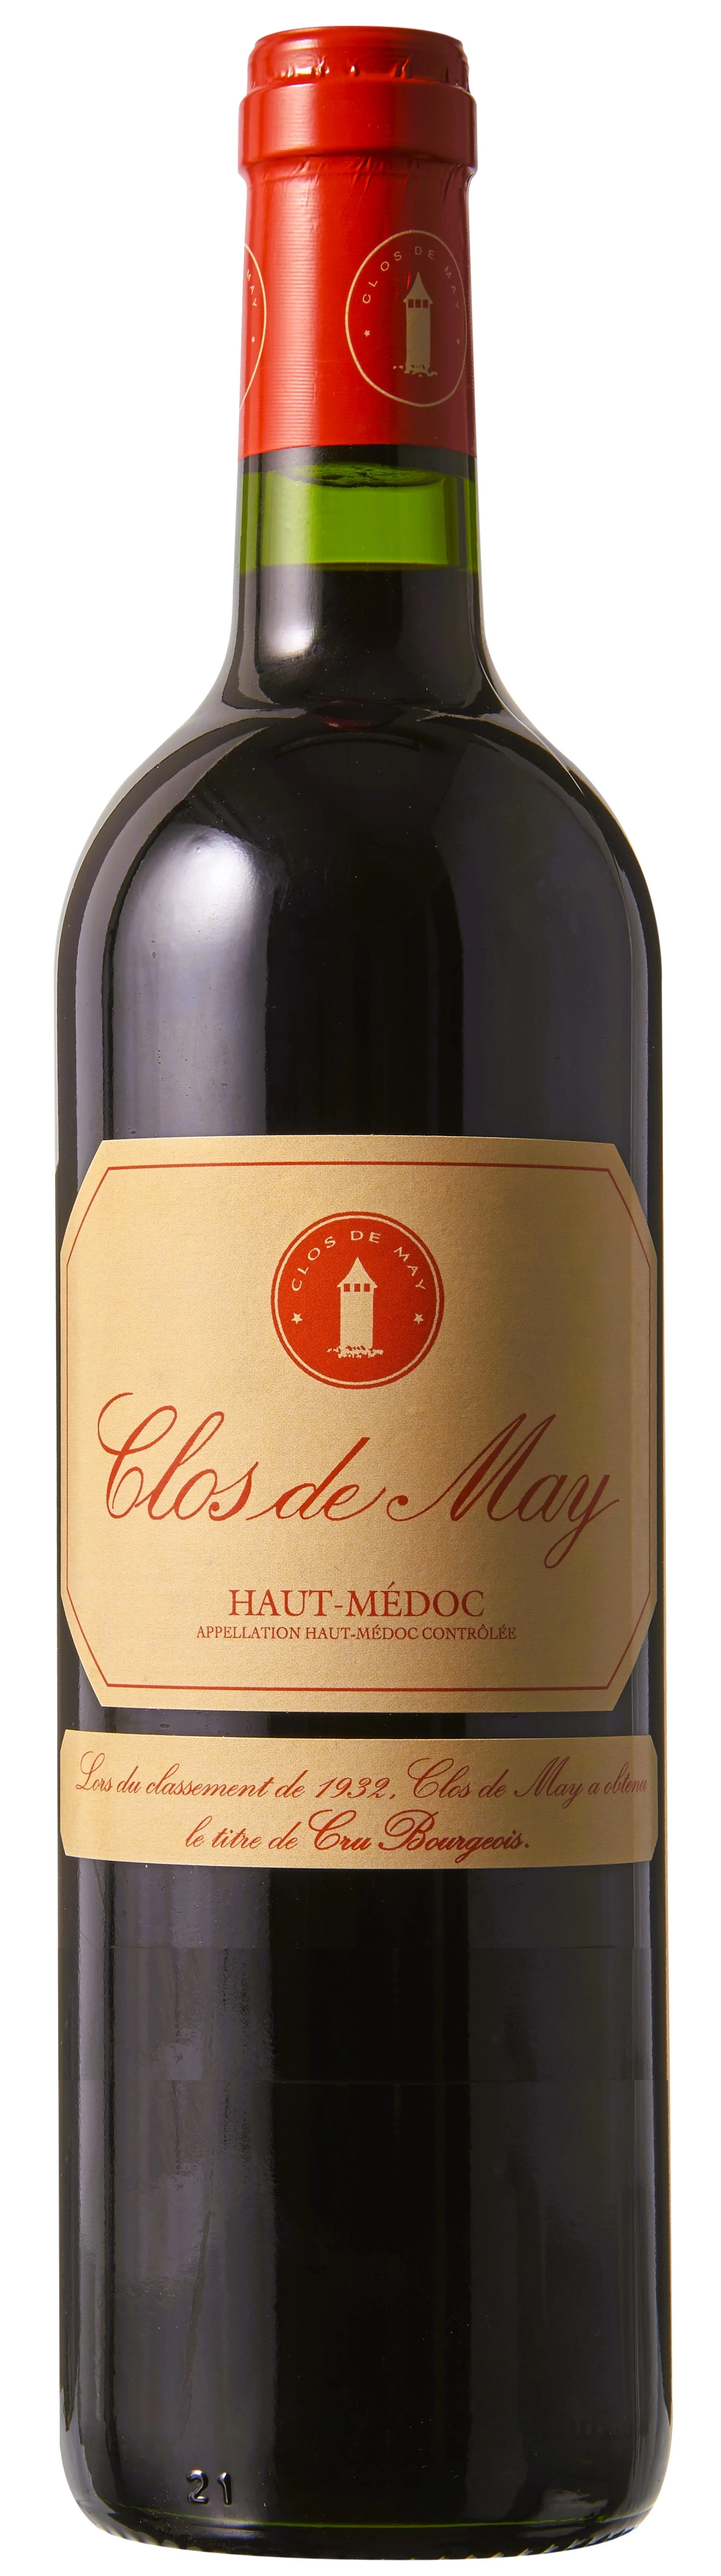 Clos-de-May_Haut-Medoc-2015TILNV